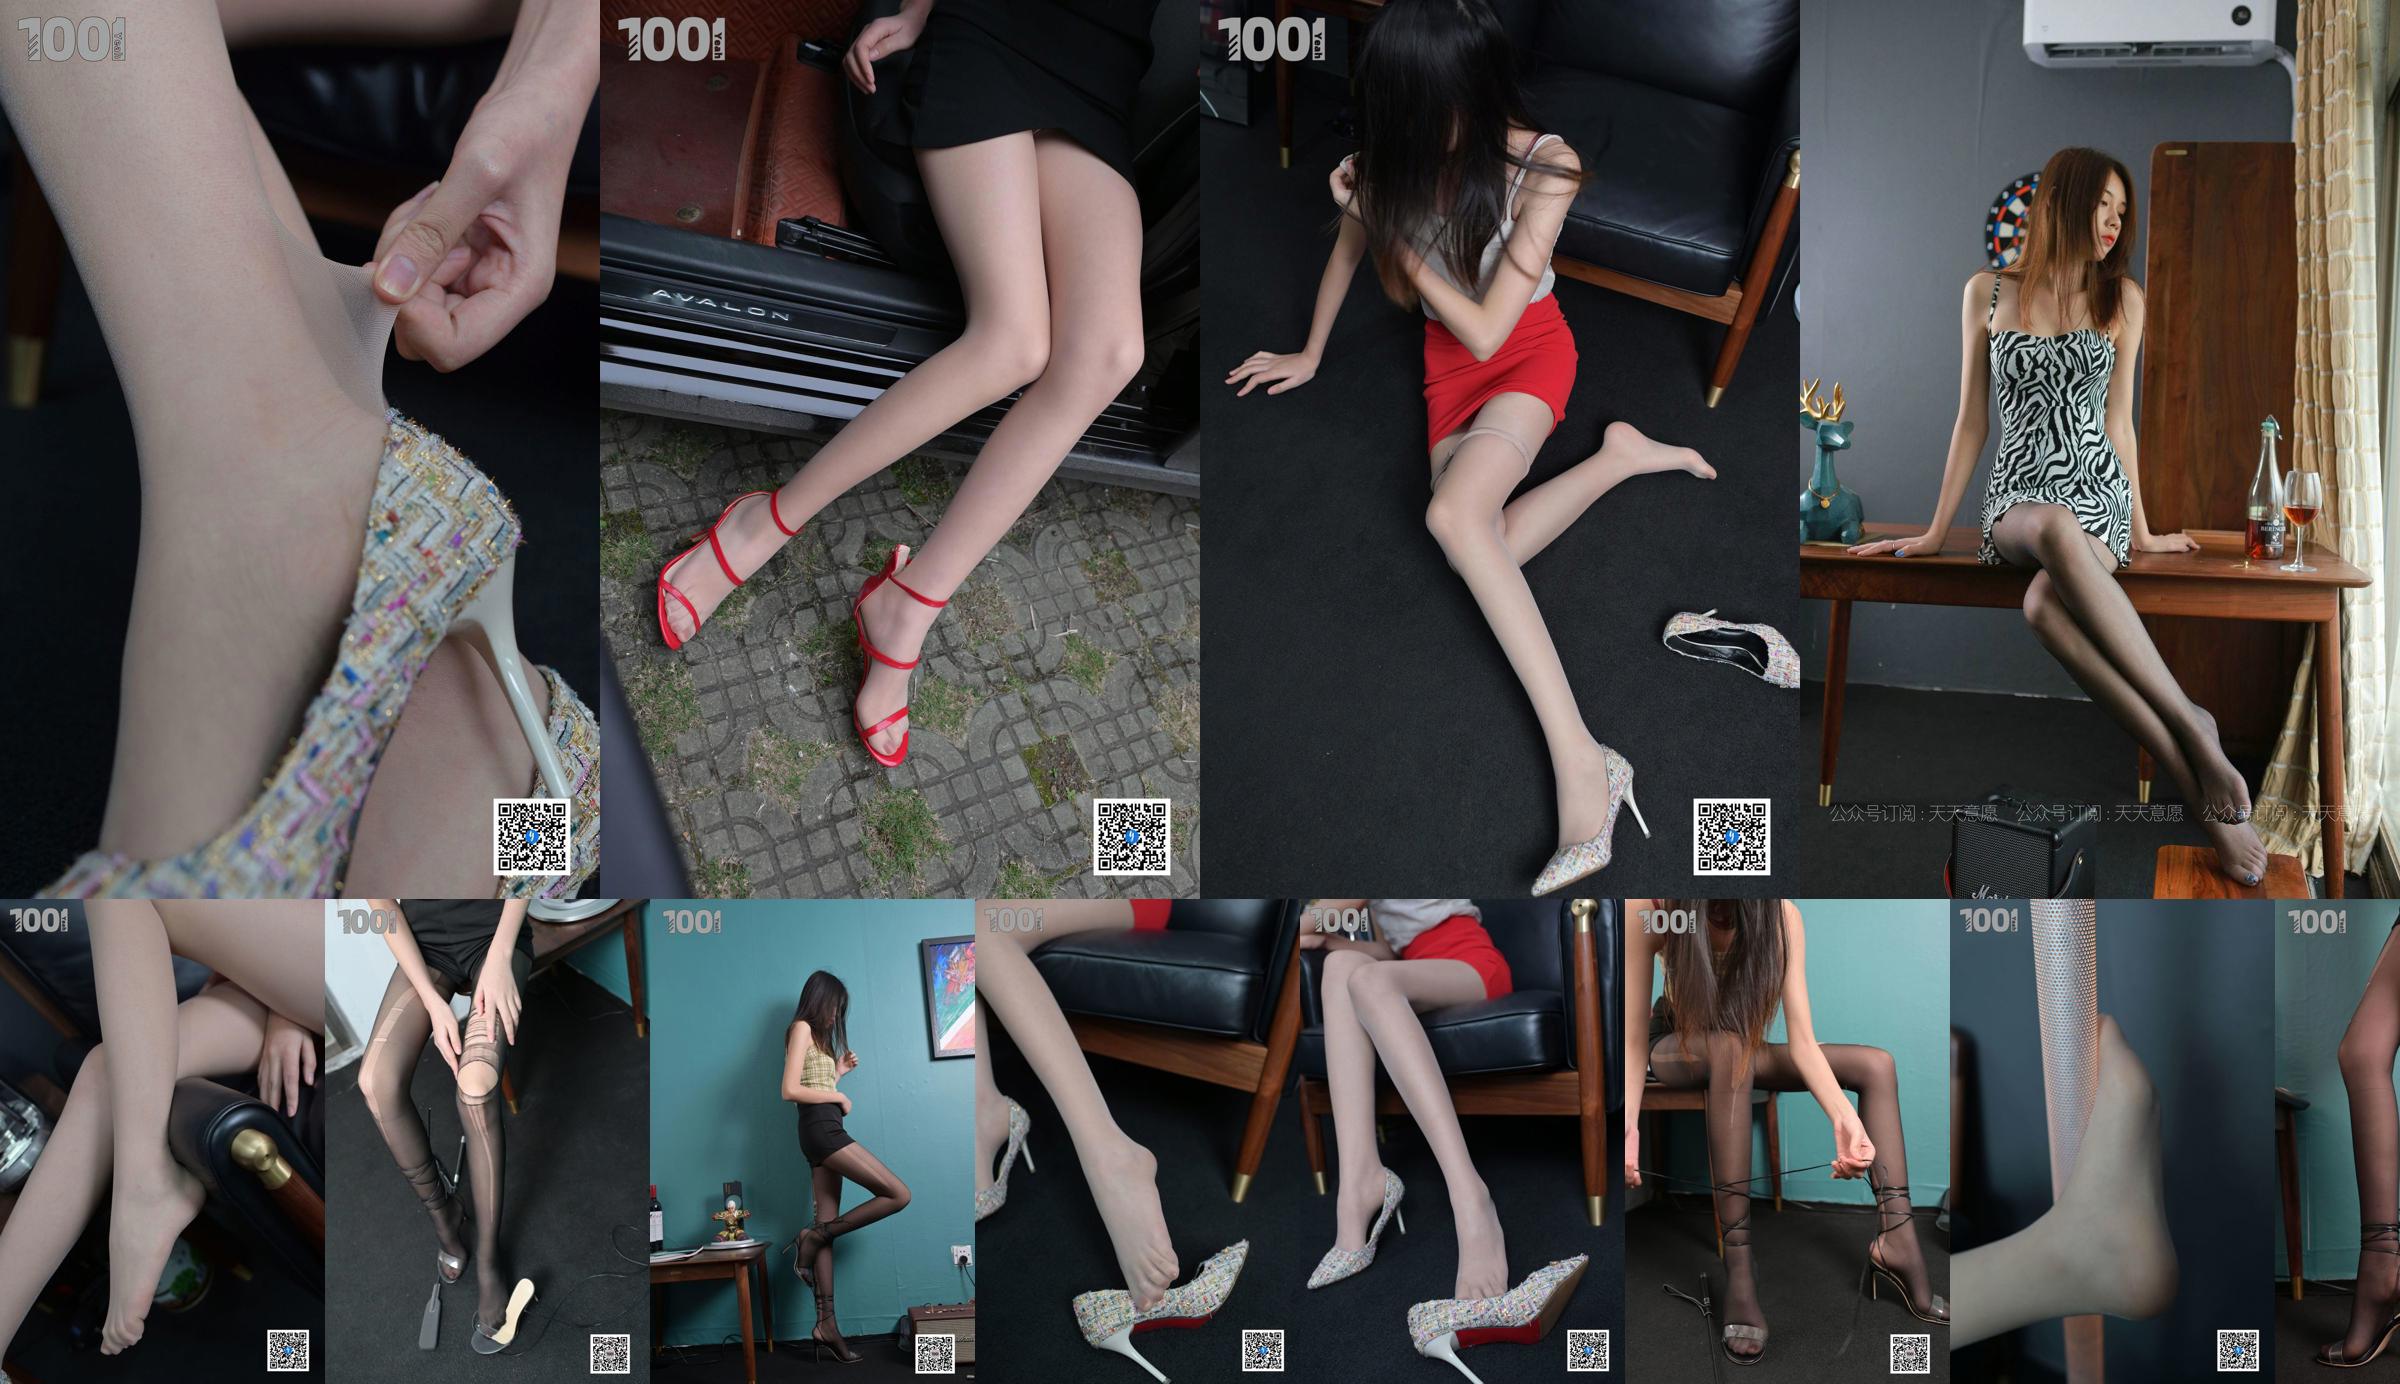 [丽 柜 LiGui] Modello Wei Wei "Piede di seta segreta con tacco alto in seta grigia" Foto di belle gambe e piedi di giada No.94a500 Pagina 1